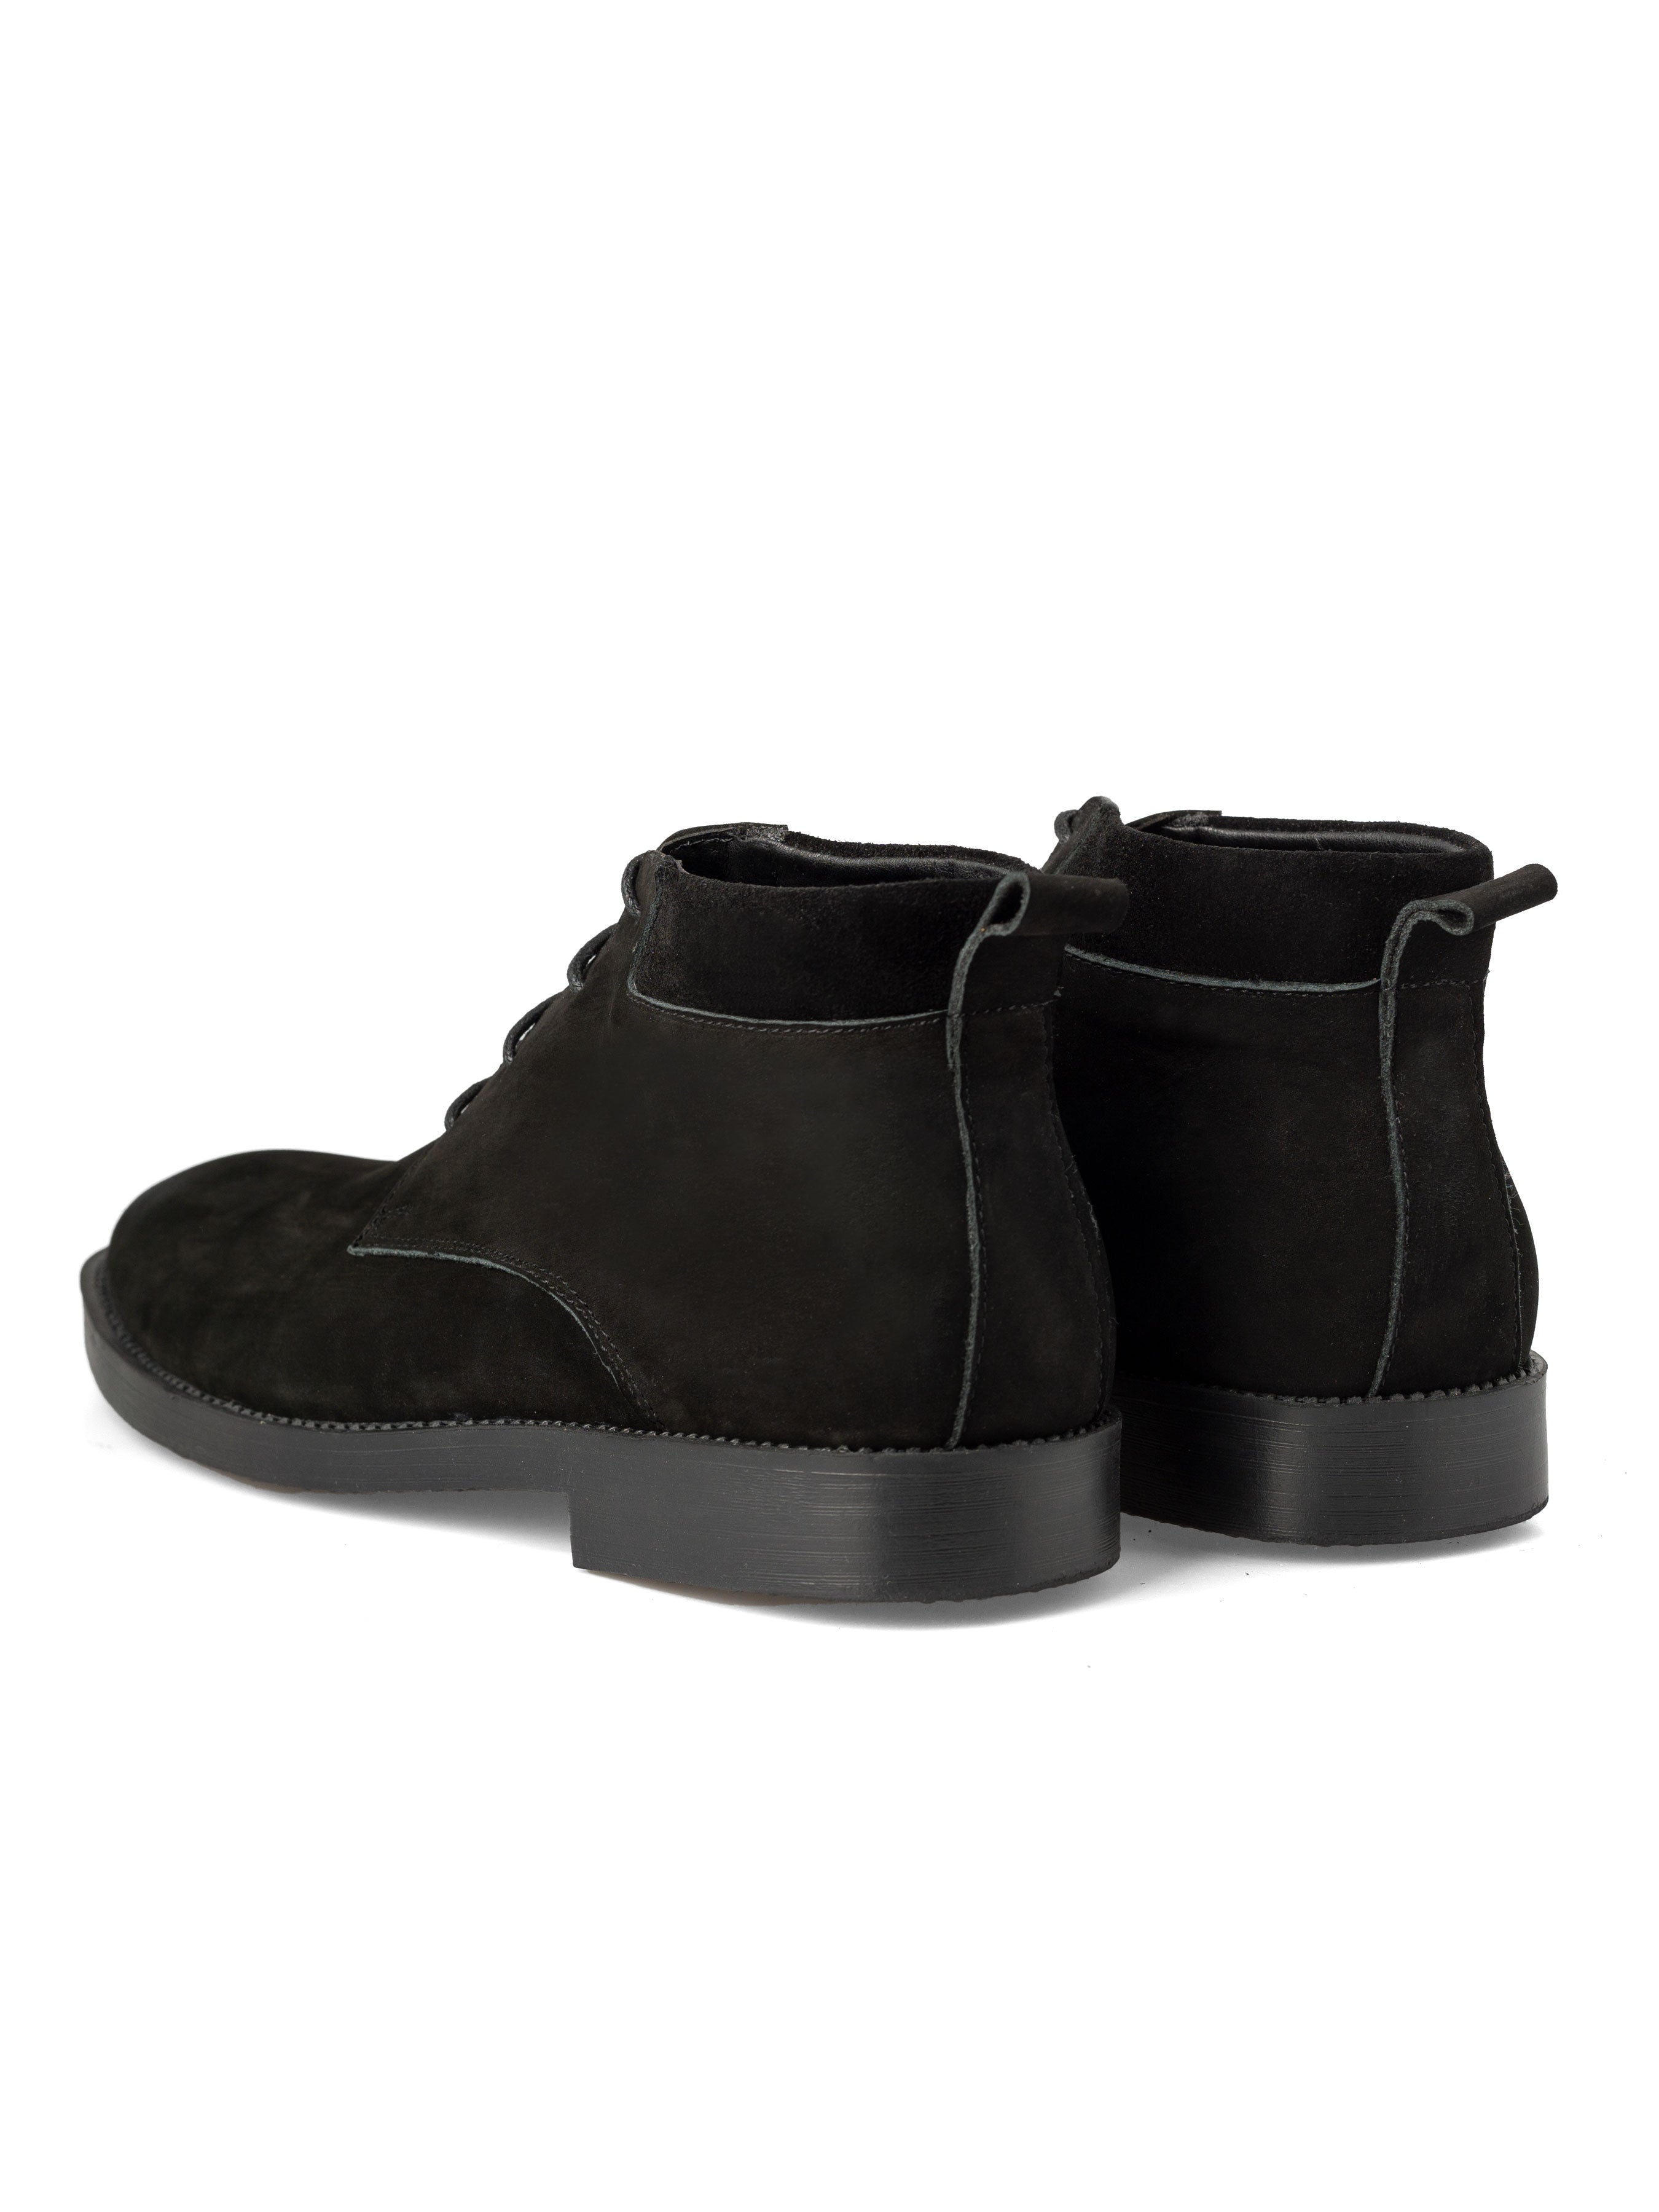 Hunter Chukka Boots - Black Nubuck Leather (Crepe Sole) - Zeve Shoes